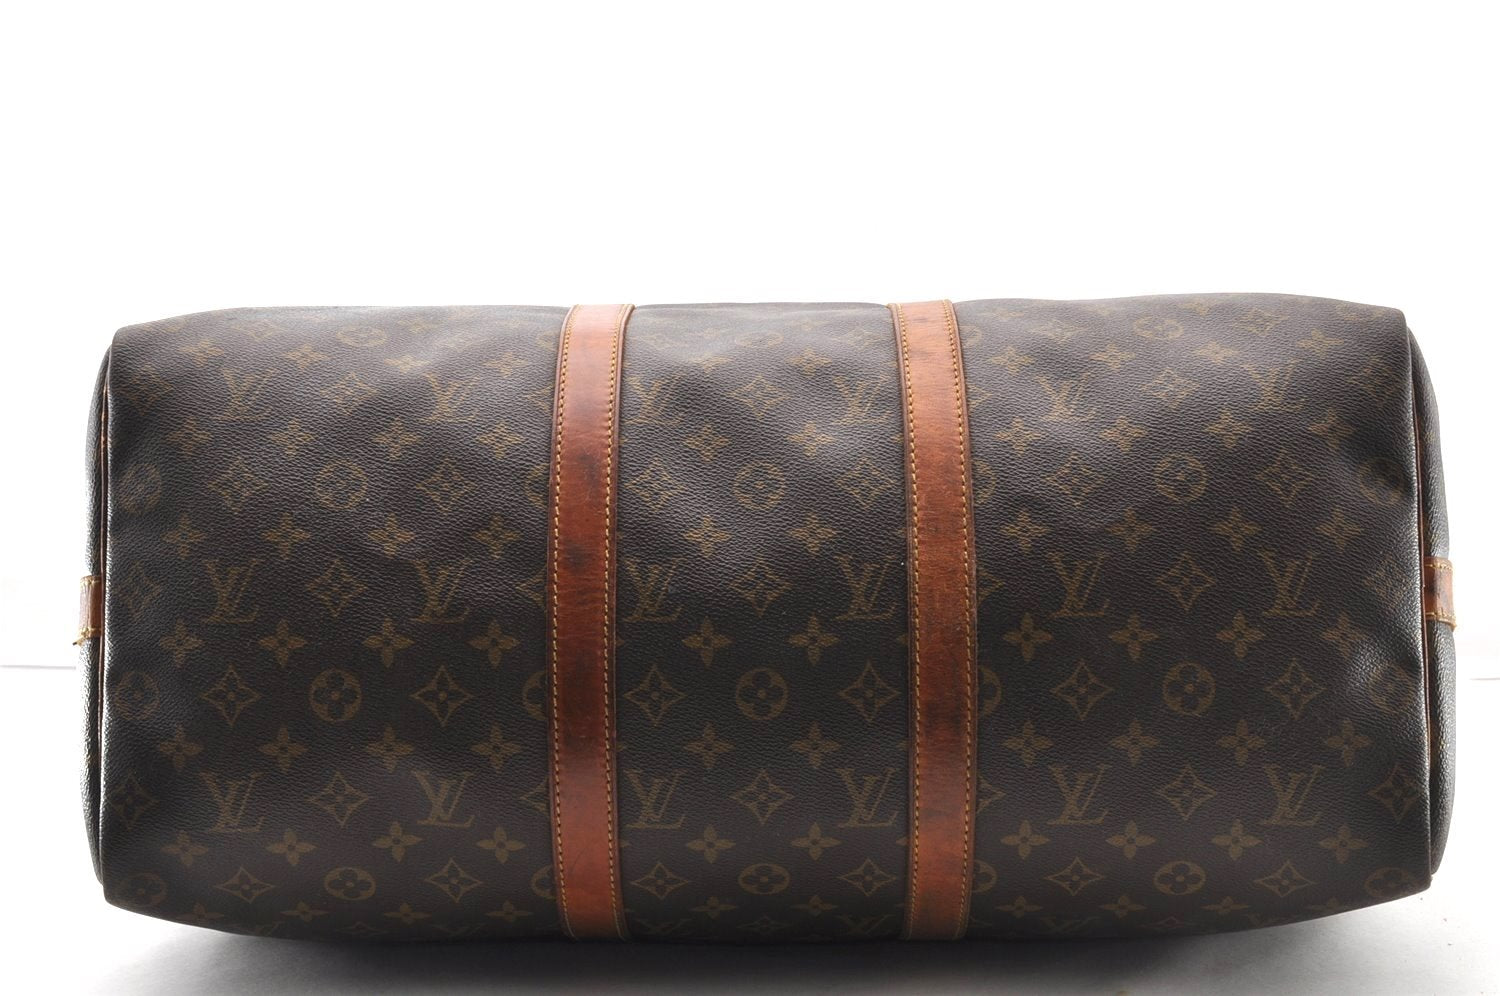 Authentic Louis Vuitton Monogram Keepall Bandouliere 50 M41416 Boston Bag 8196I